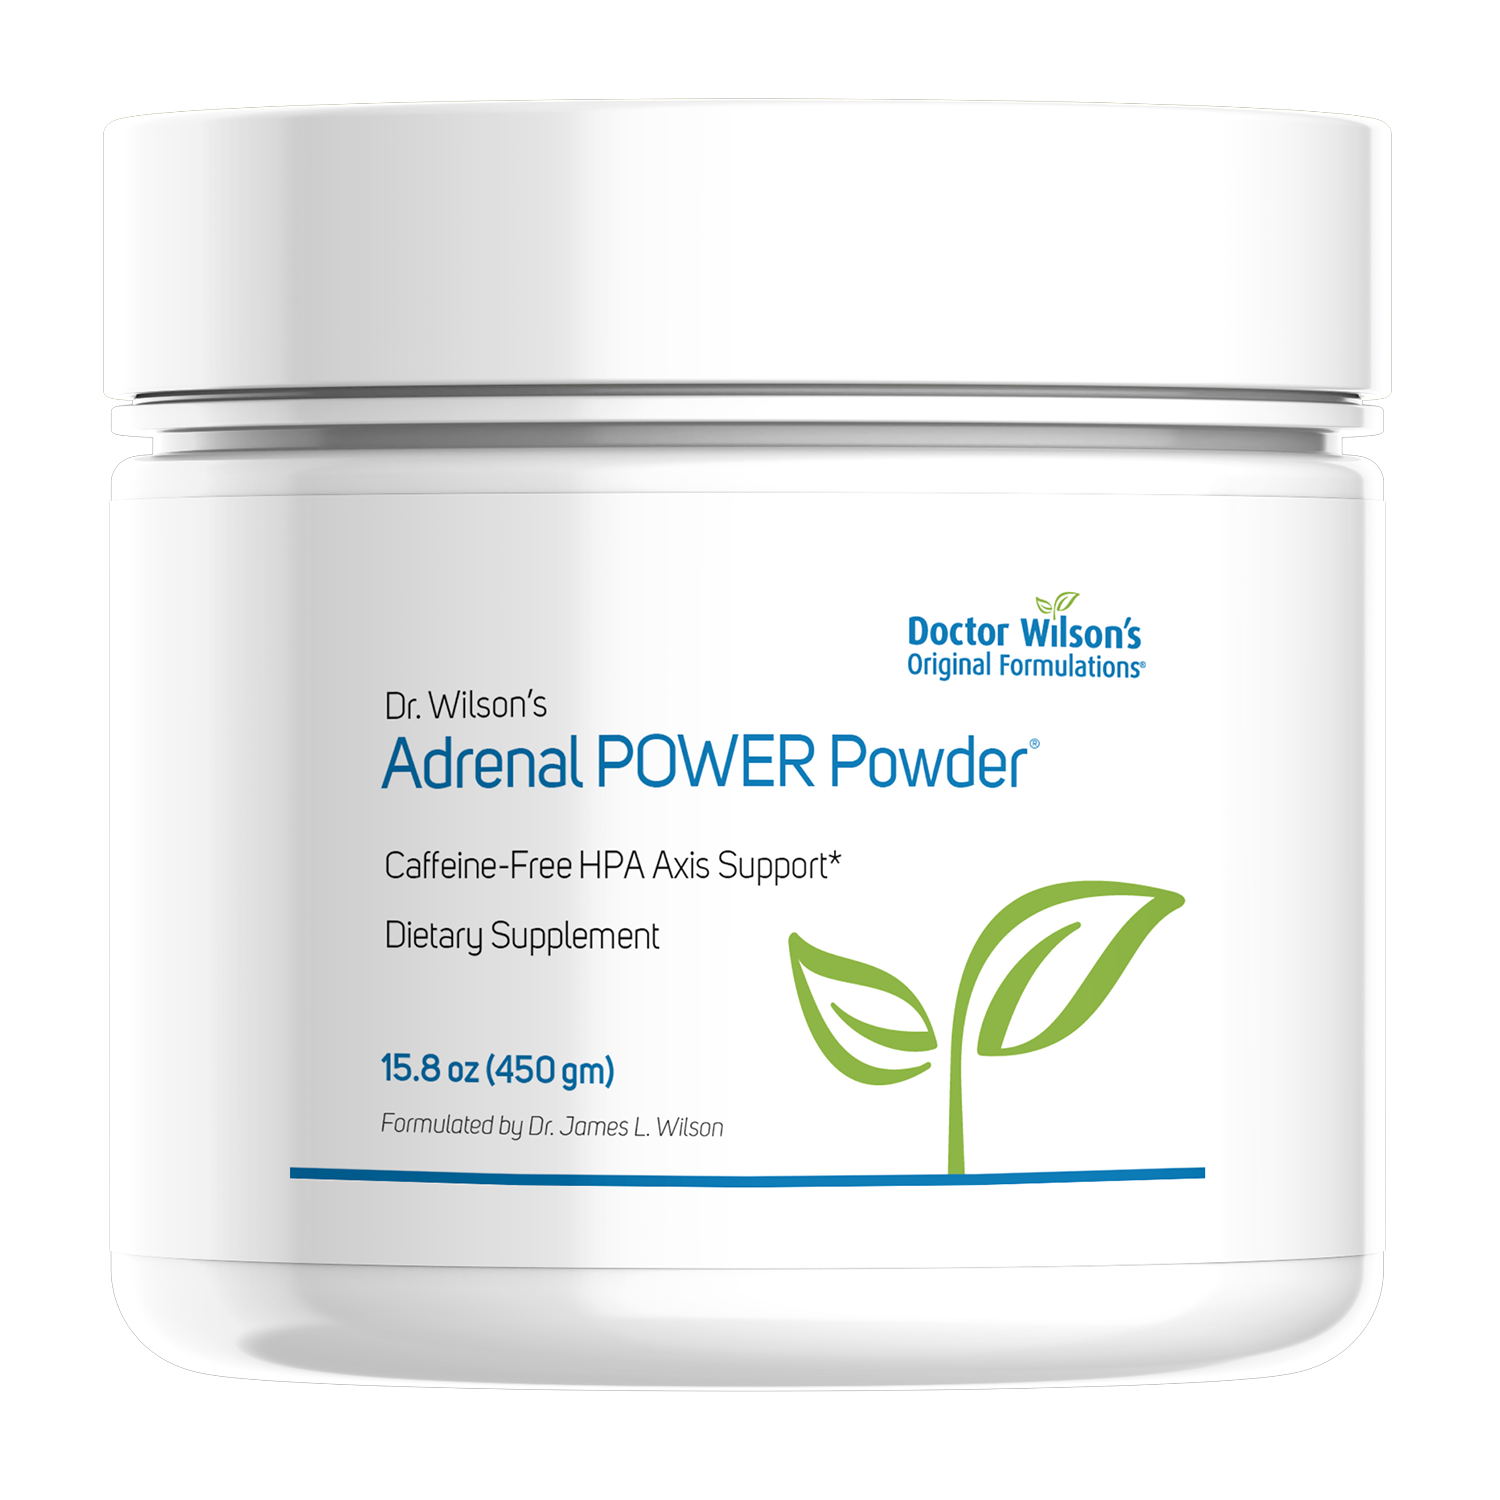 Dr. Wilson's Adrenal Power Powder